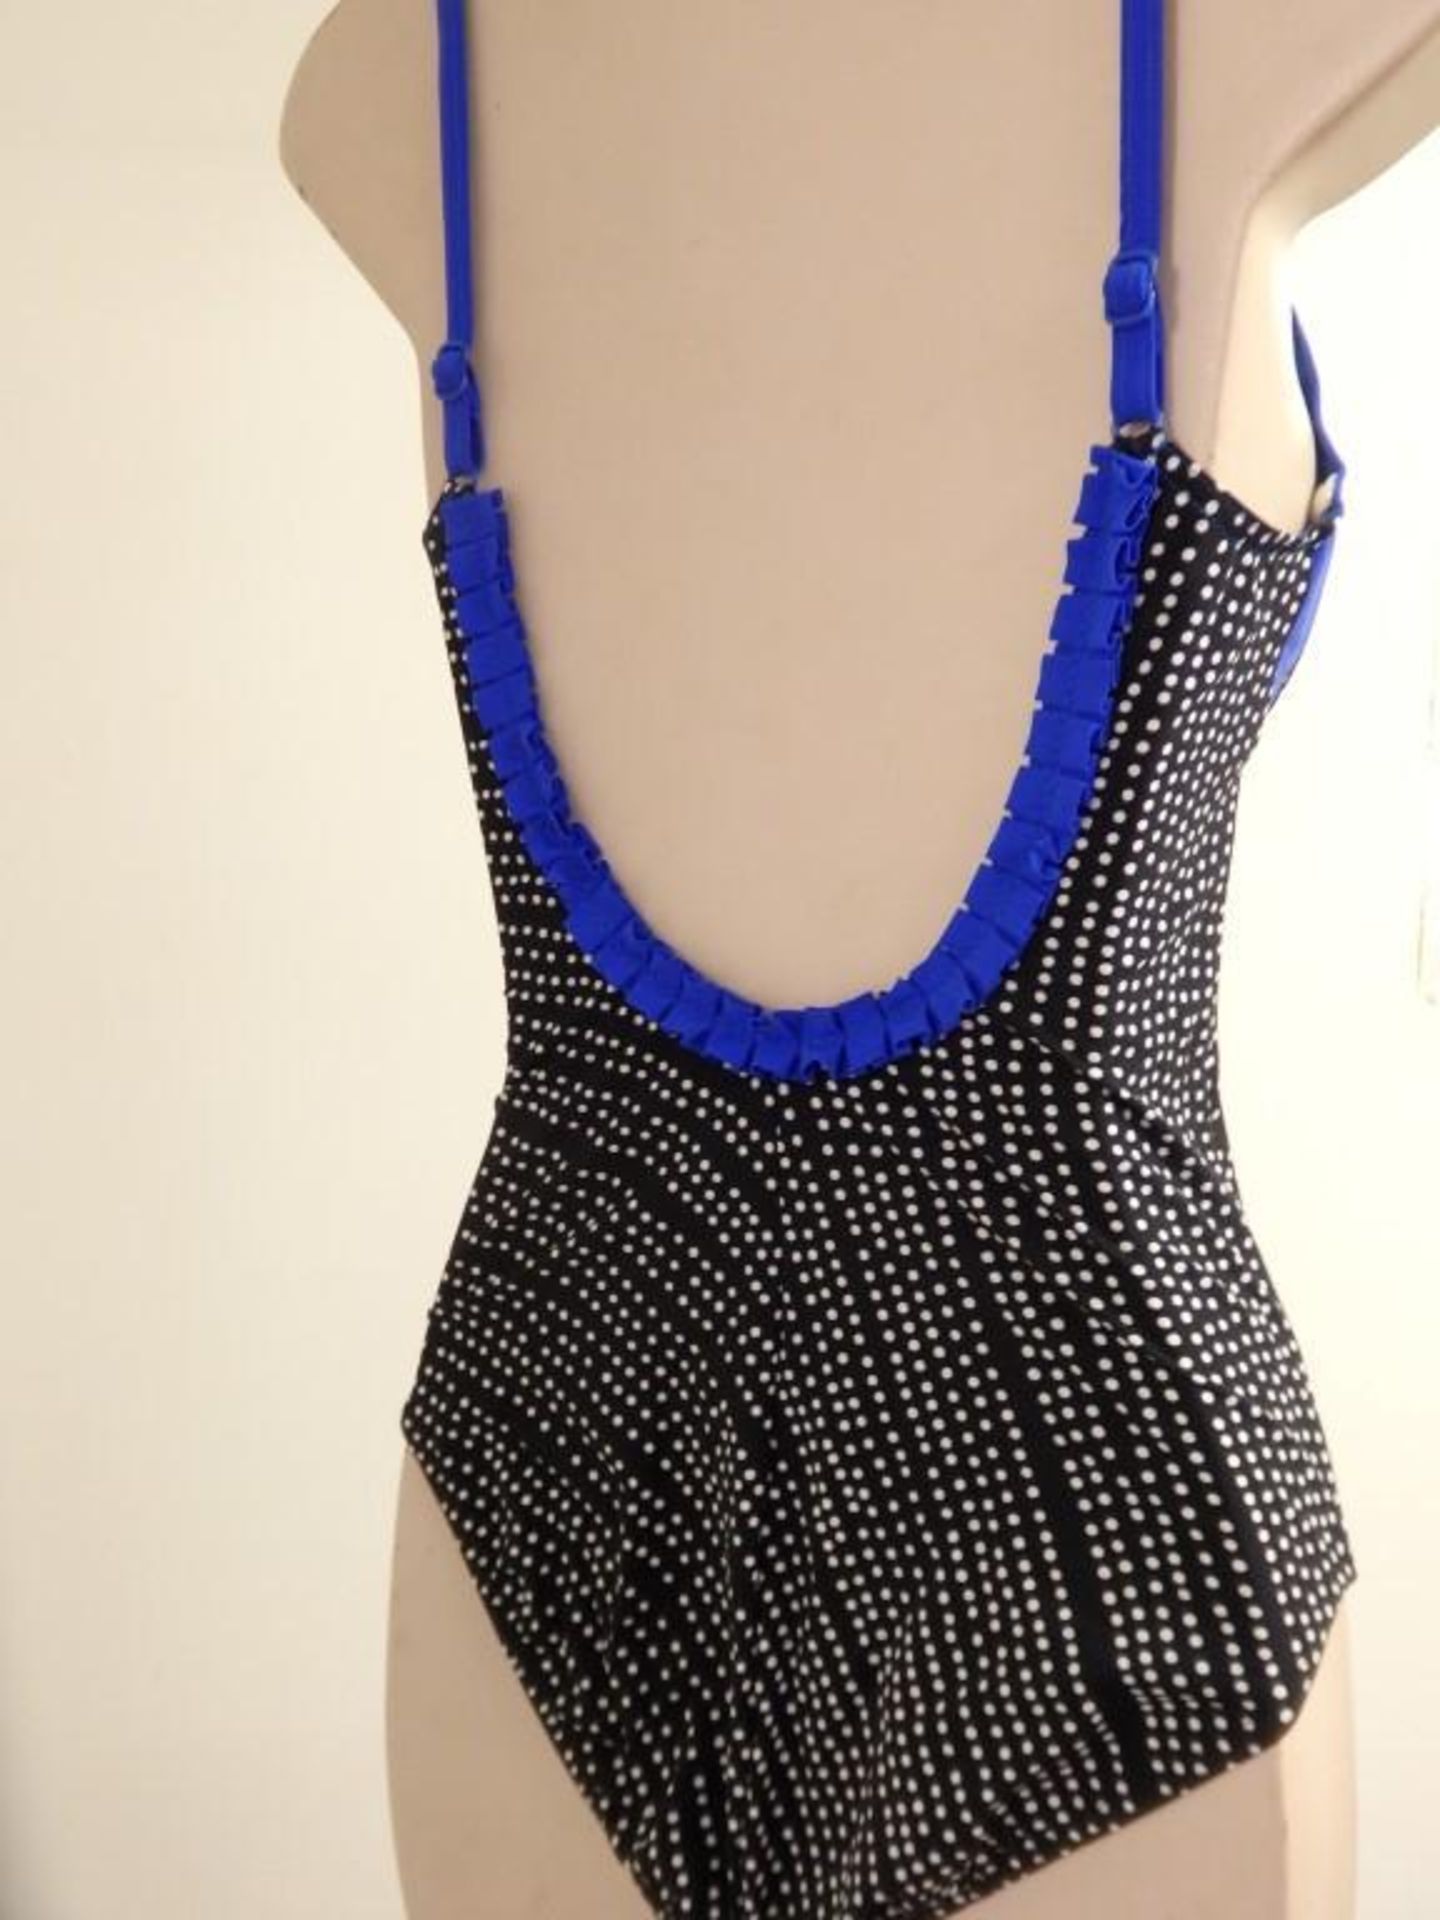 1 x Rasurel - Black Polka dot with royal blue trim &frill Tobago Swimsuit - B21039 - Size 2C - UK 32 - Image 5 of 8